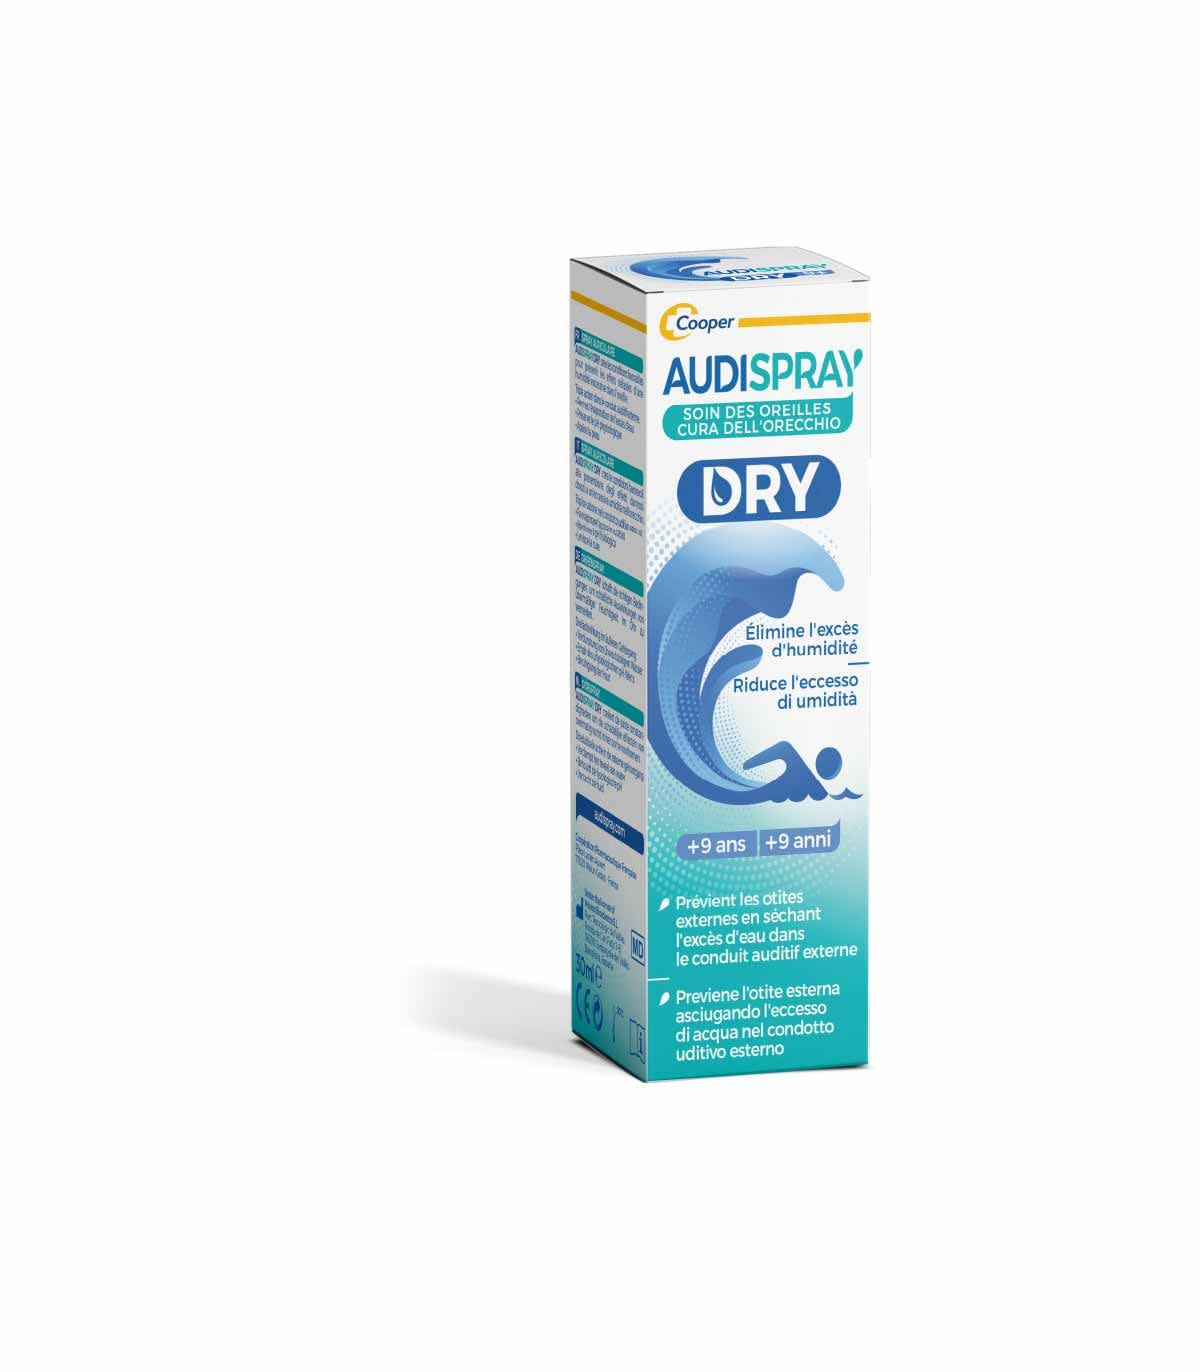 980292647 - Audispray Dry Spray auricolare 30ml - 4736079_3.jpg